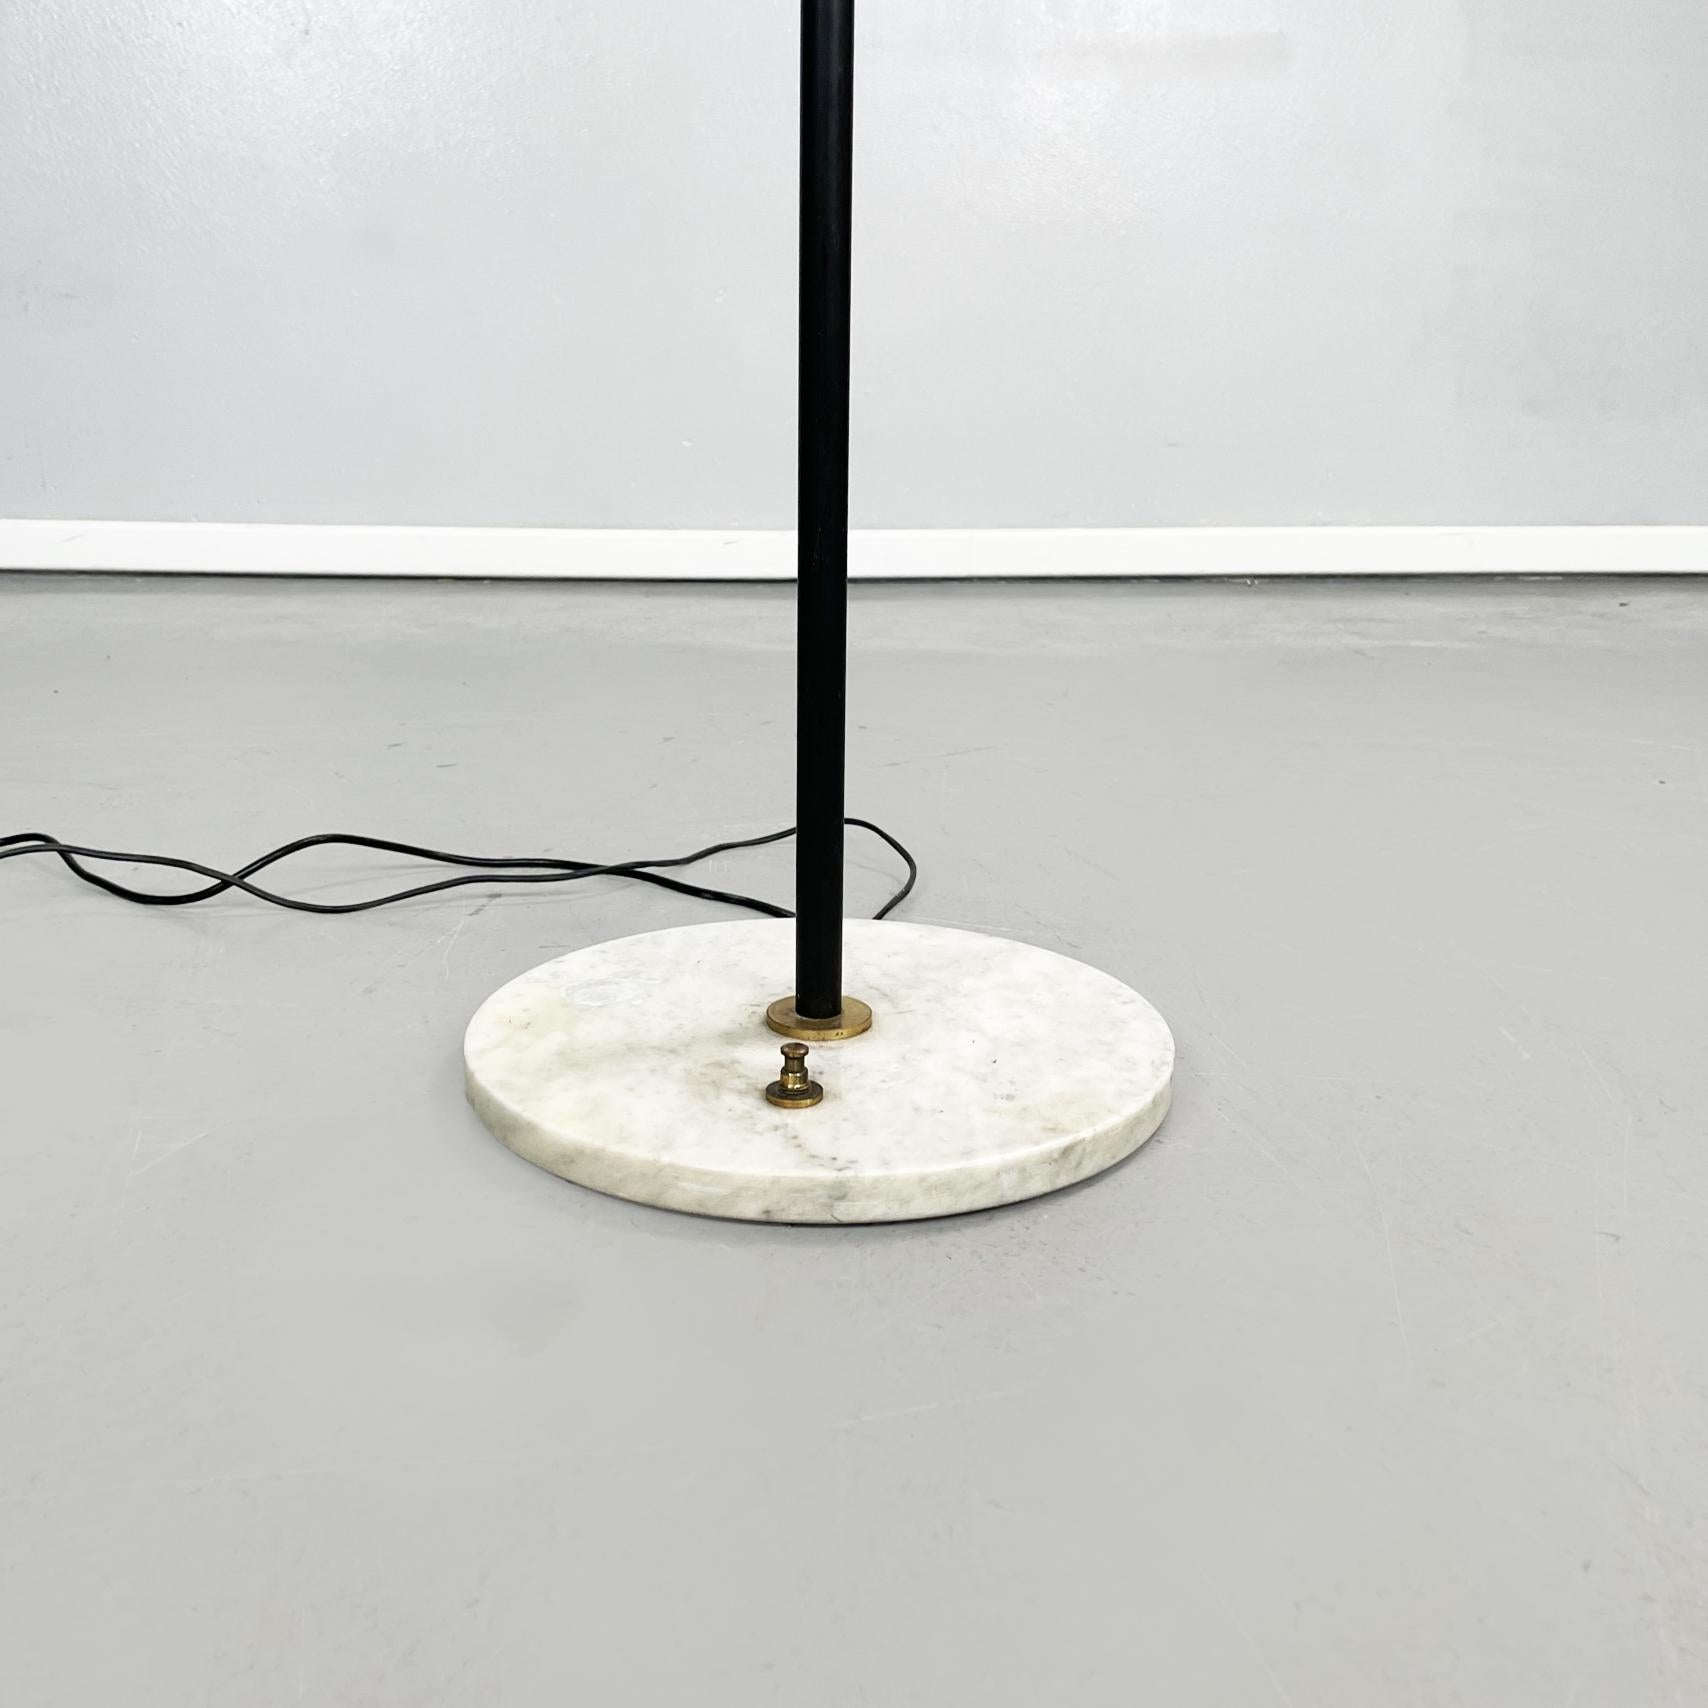 Italian Mid-Century Modern Adjustable Brass Metal Floor Lamp by Stilux, 1950s For Sale 9